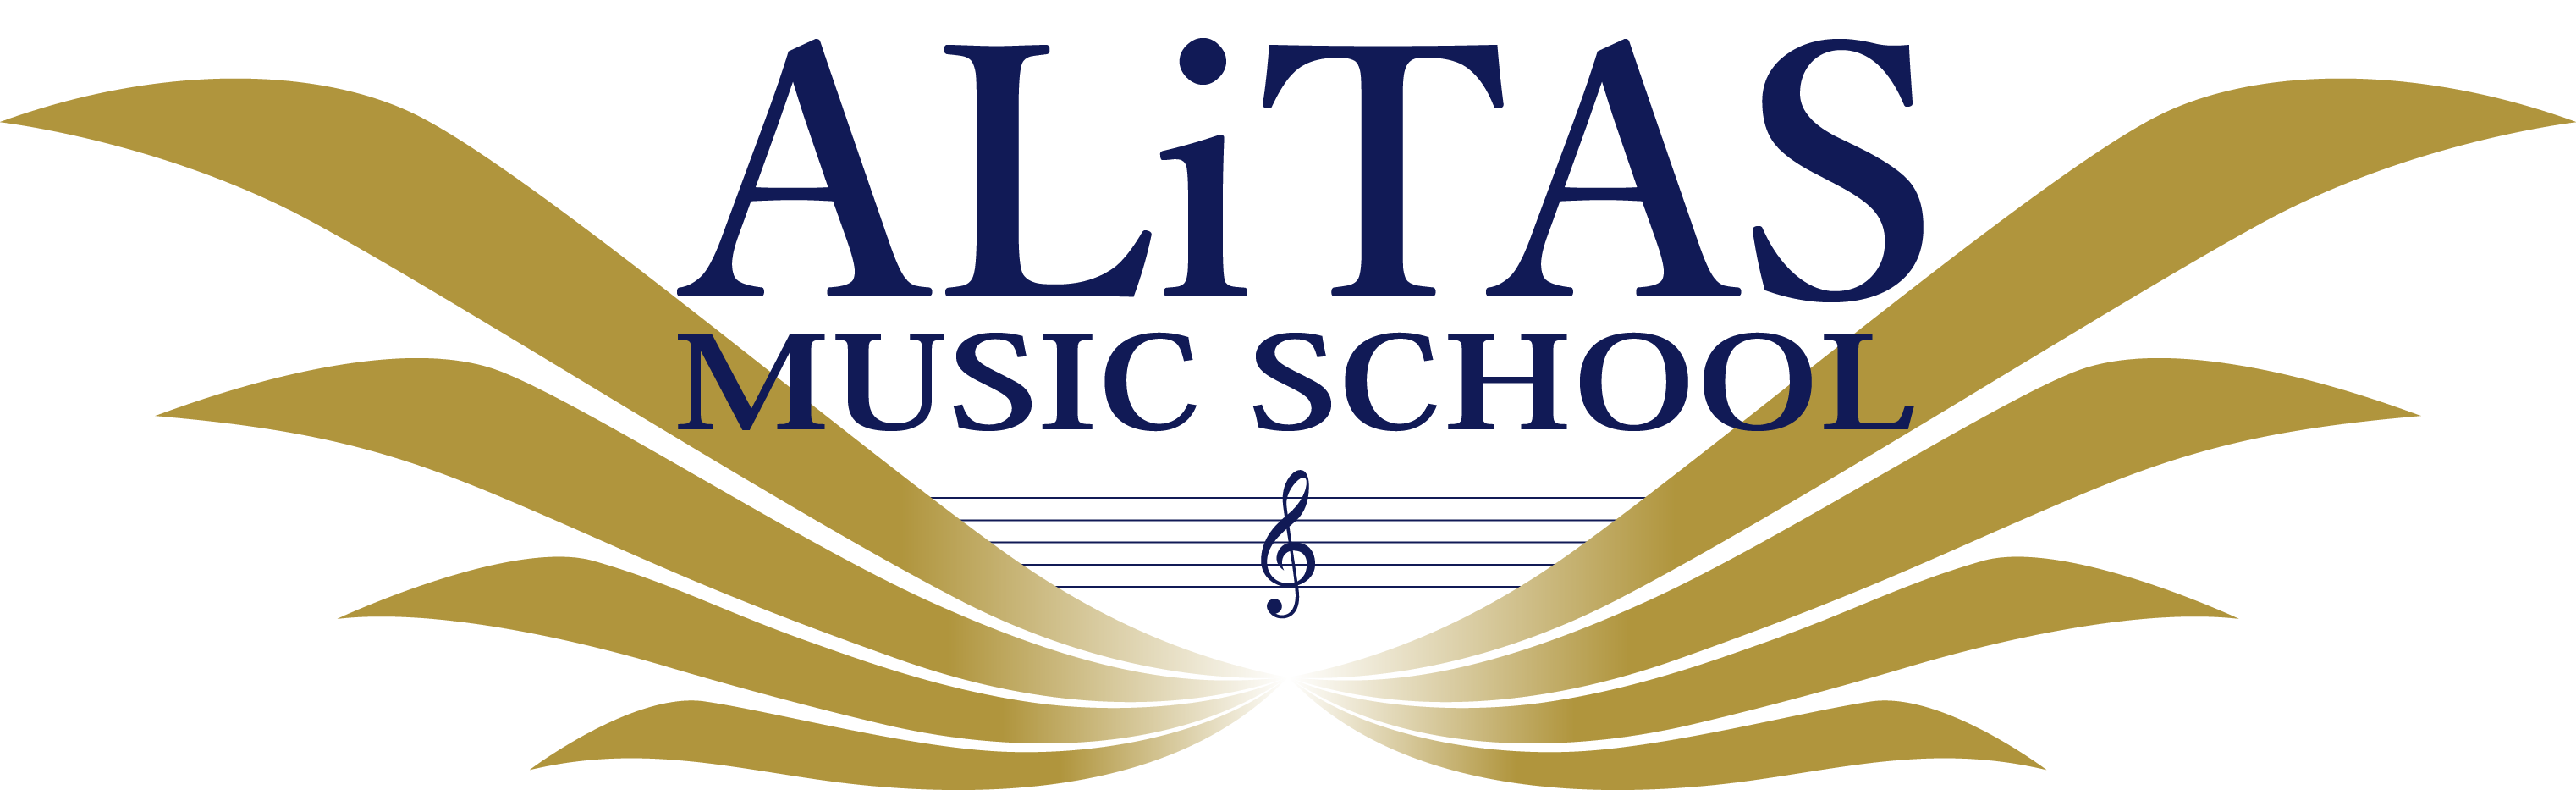 ALiTAS MUSIC SCHOOL